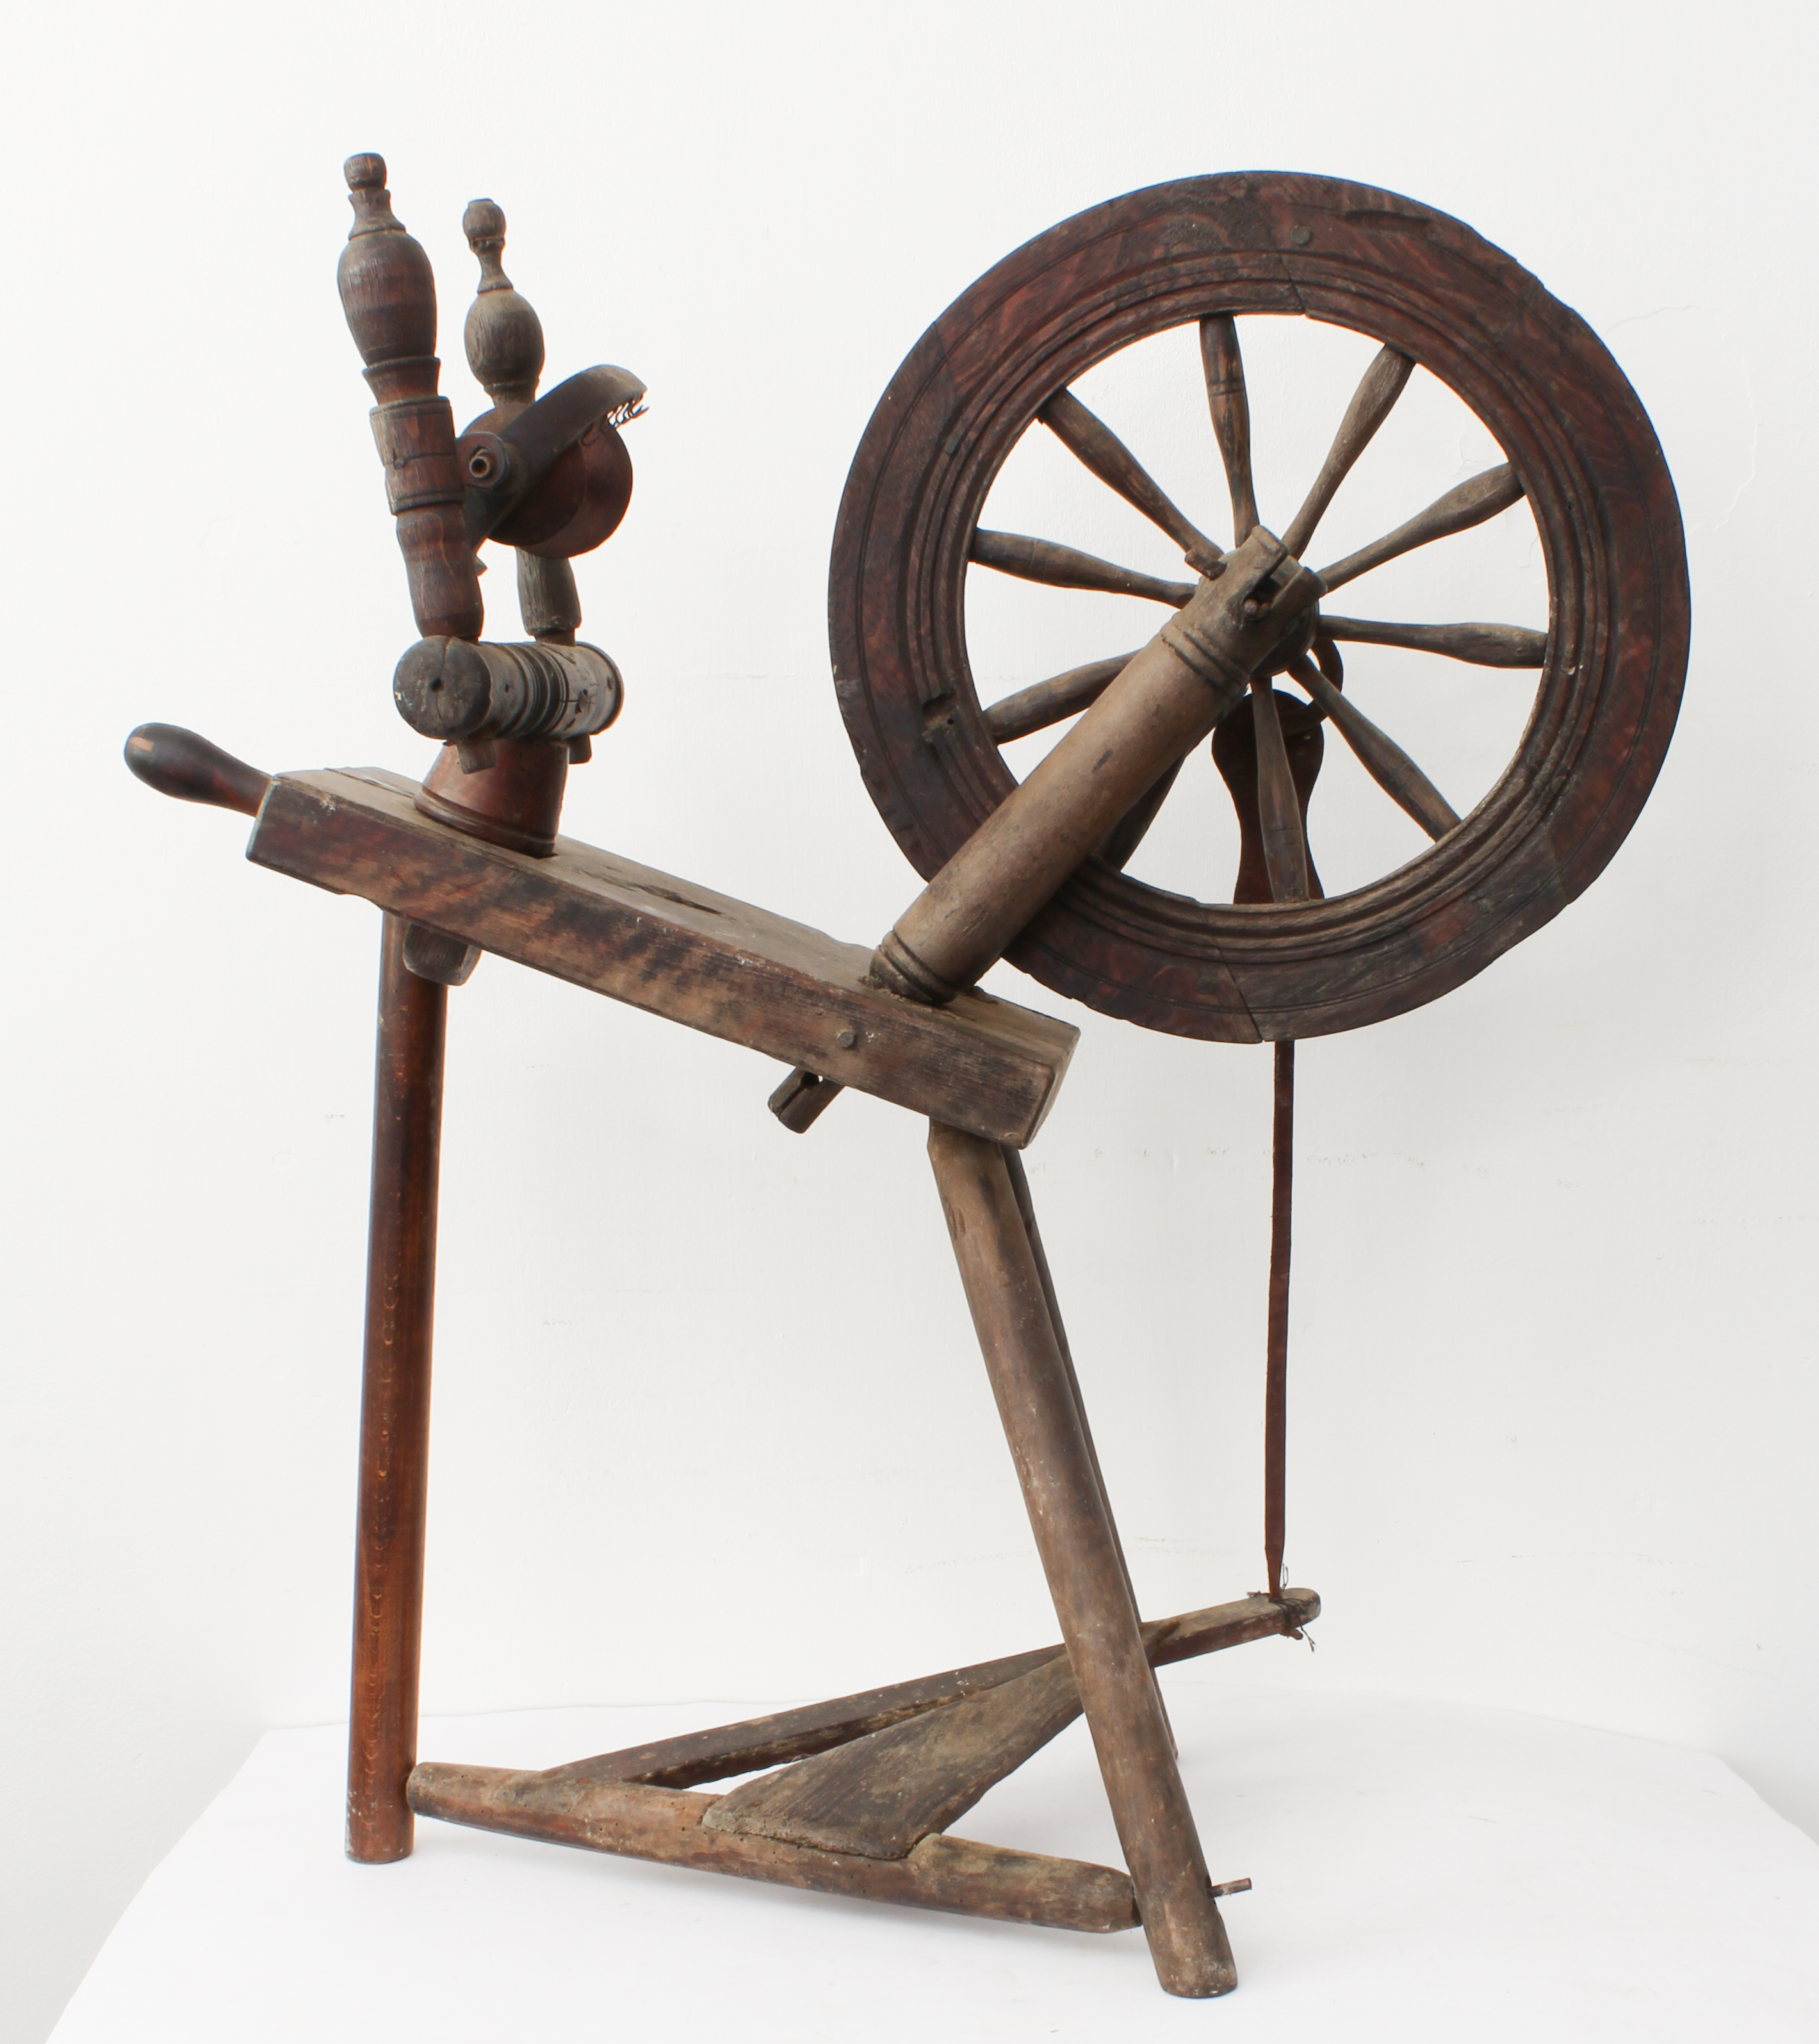 Two antique spinning wheels - some missing parts. - Bild 5 aus 5